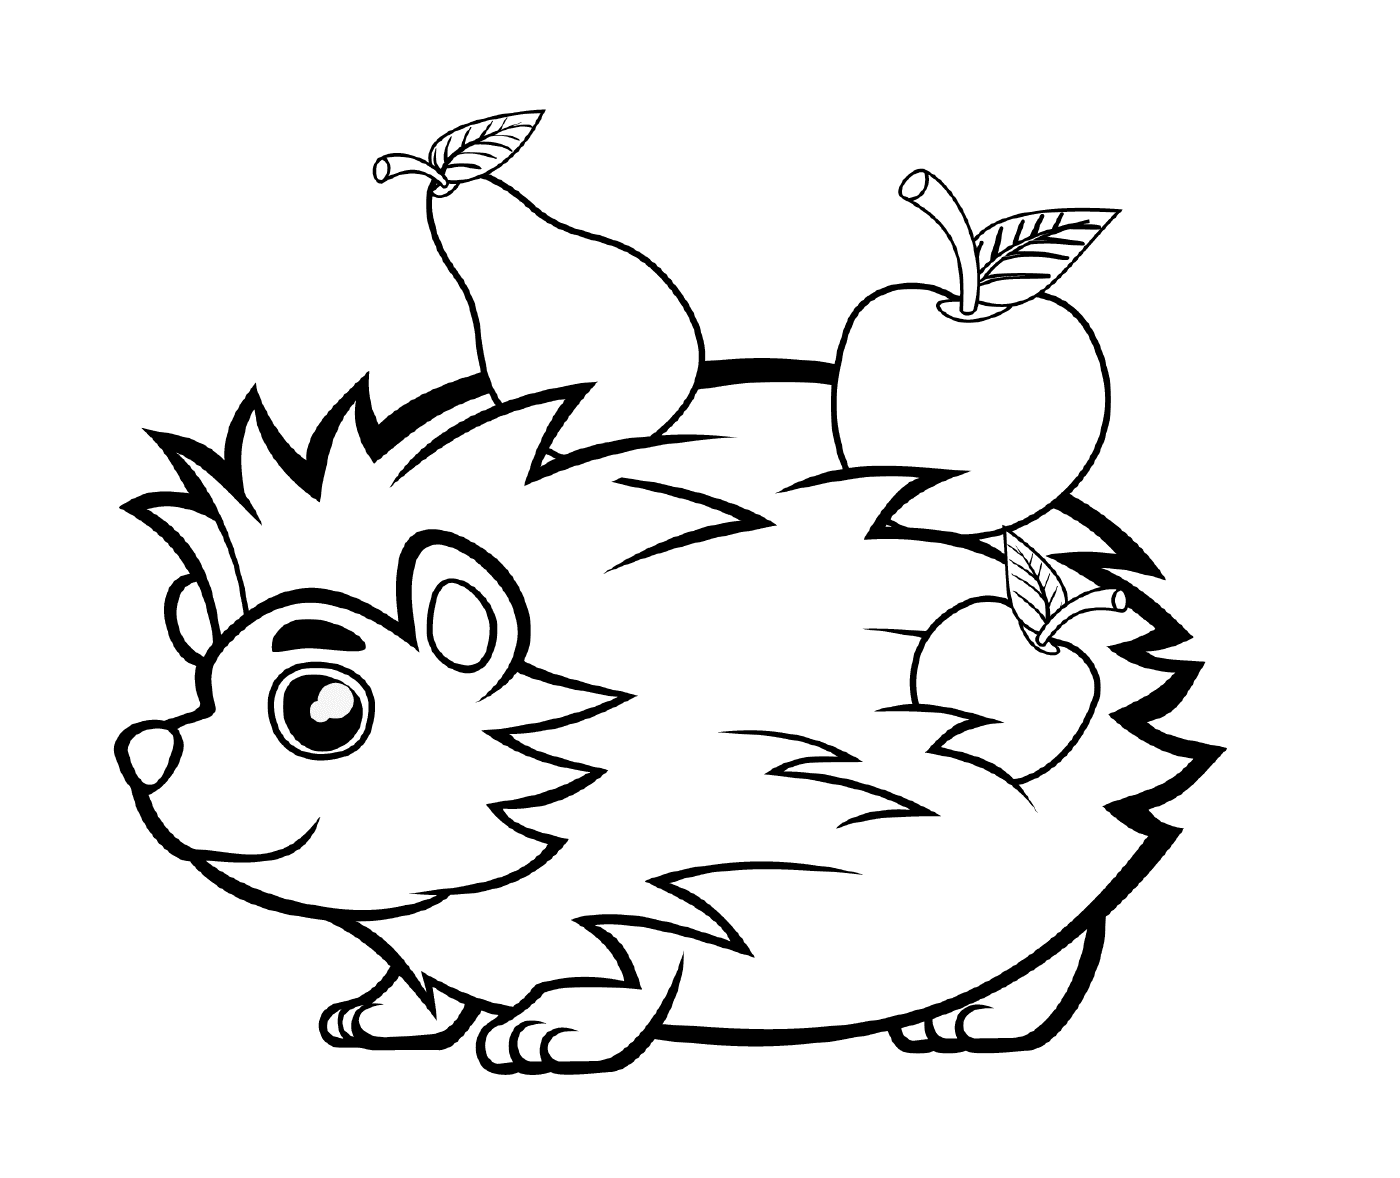  Nice hedgehog with fruit 